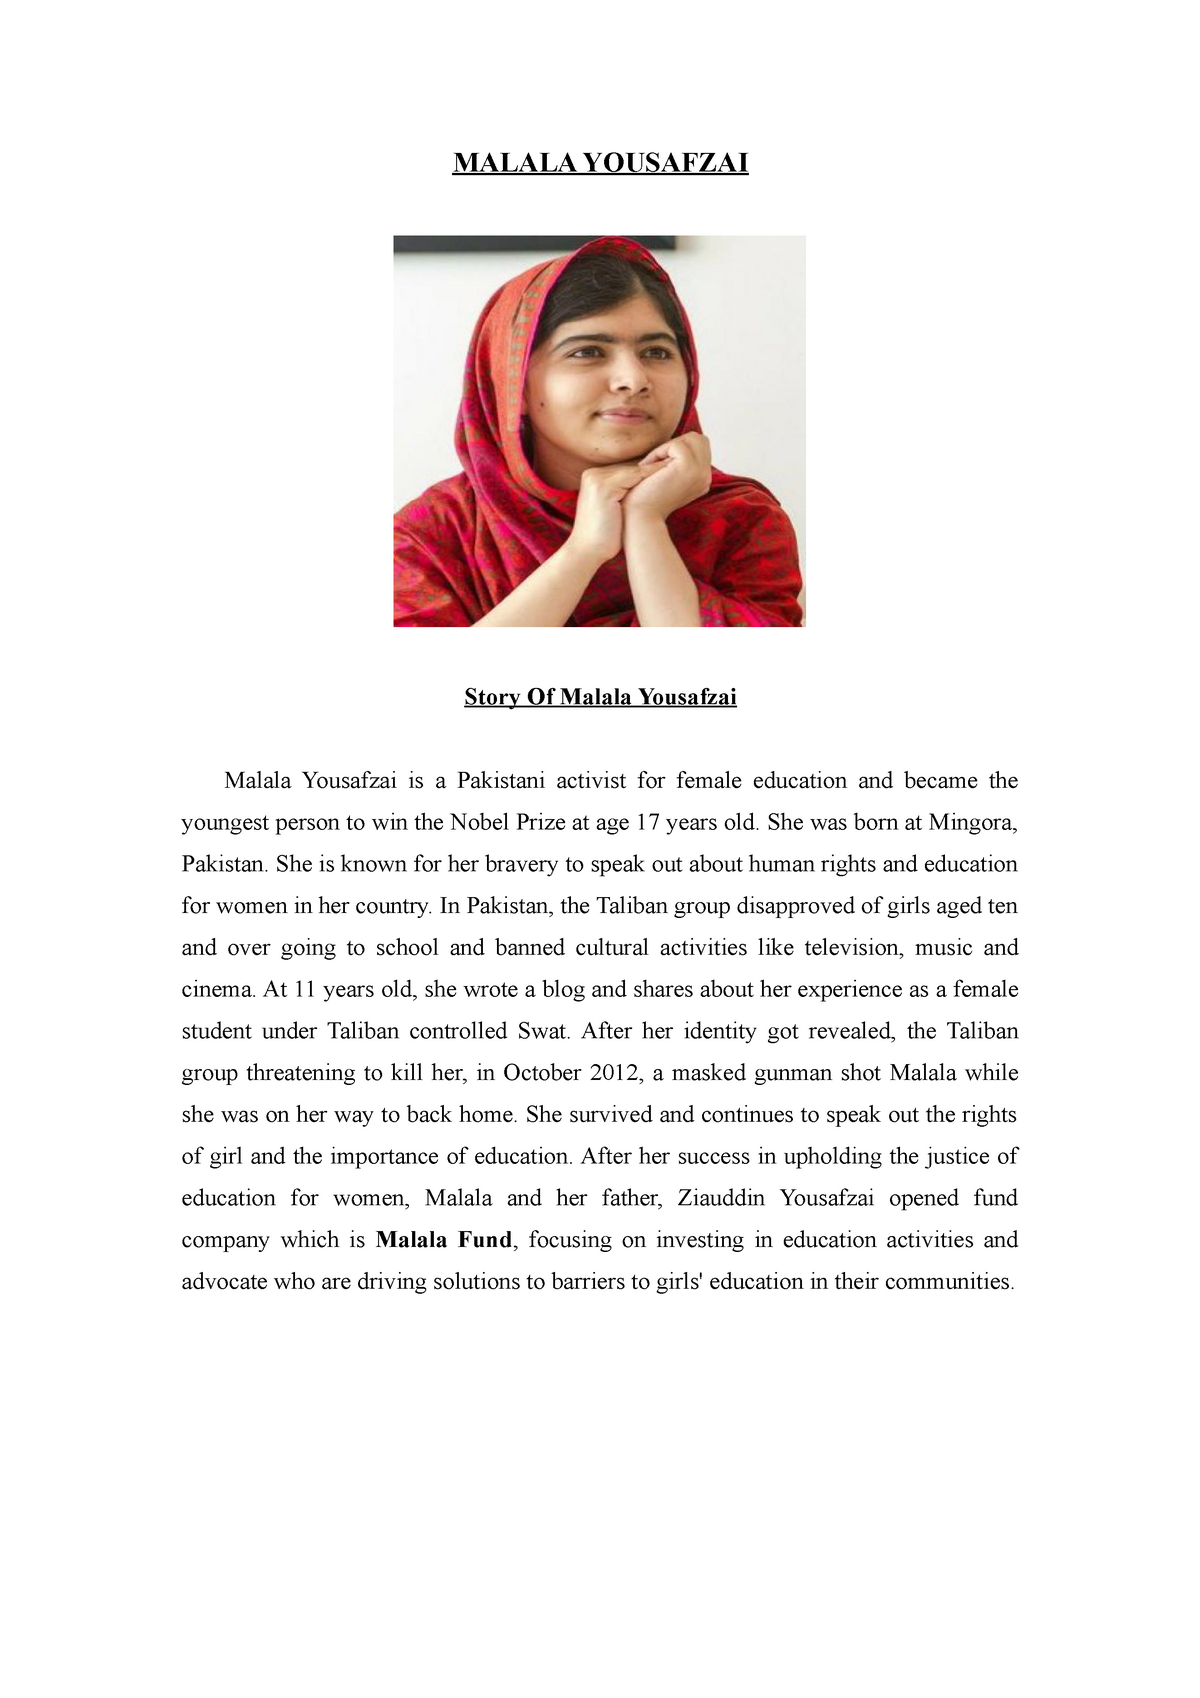 essay about malala yousafzai in english